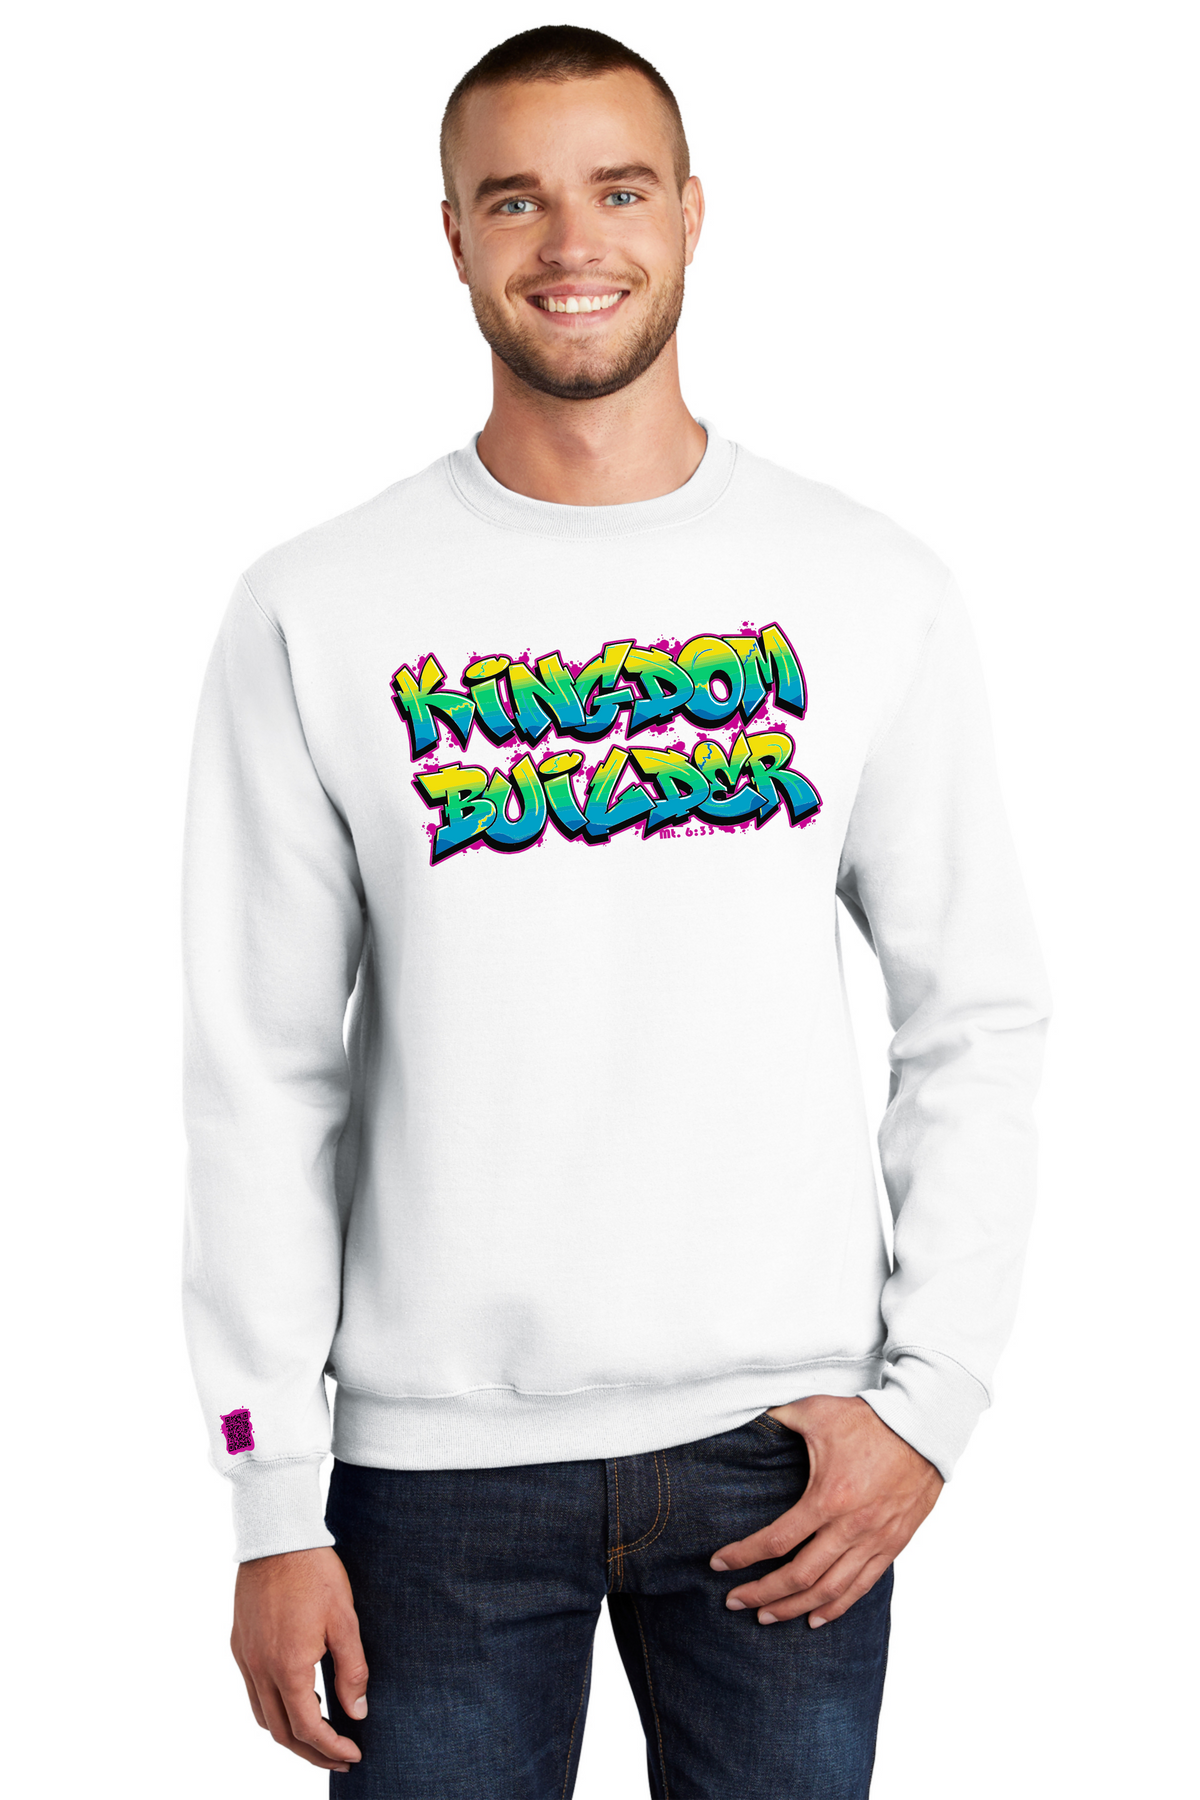 Kingdom Builder - White Sweatshirt - Colored Graphics